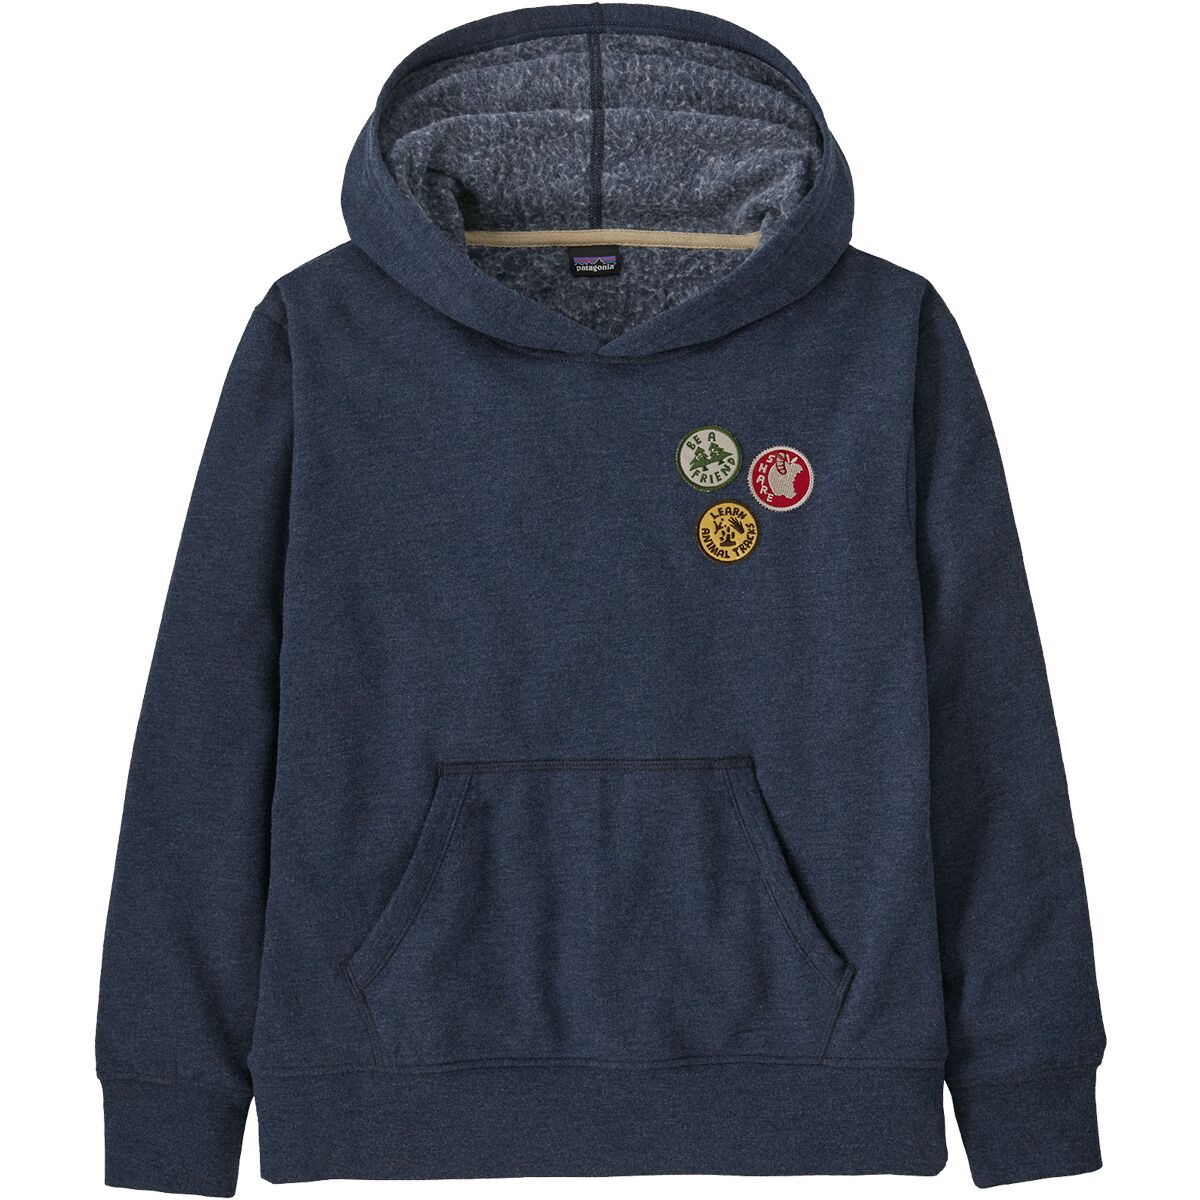 Patagonia Lightweight Graphic Hoodie Sweatshirt - Boys'